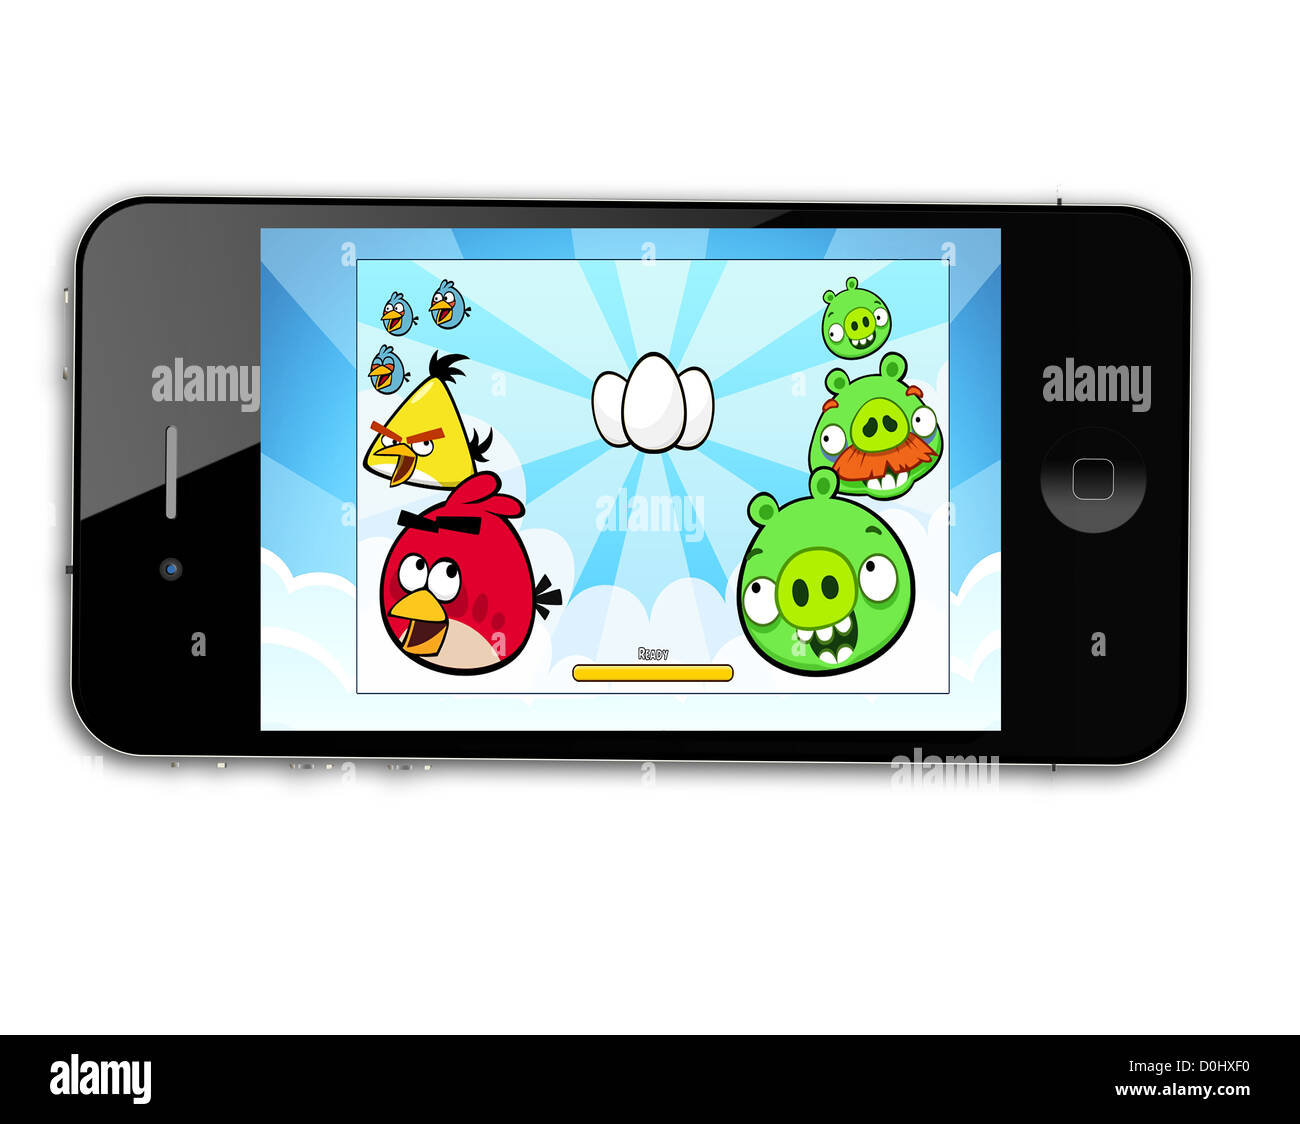 Angry Birds - un juego popular para iPhone Foto de stock